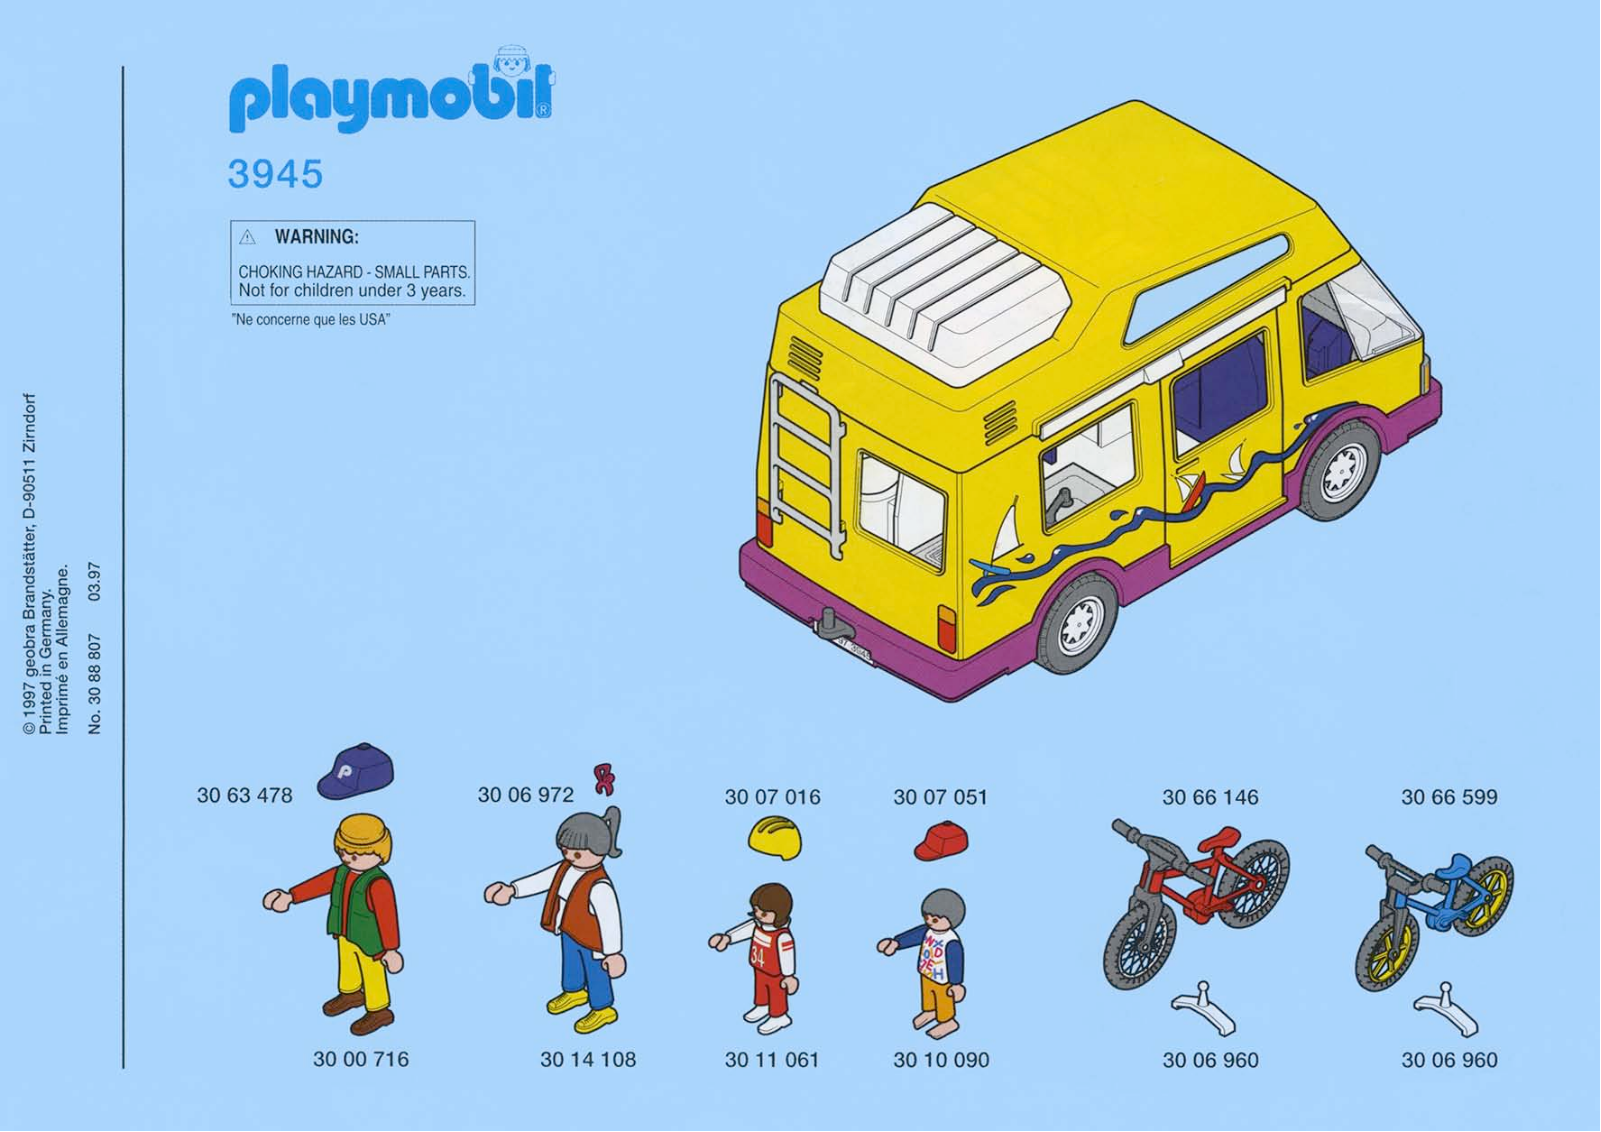 Playmobil 3945 Instructions